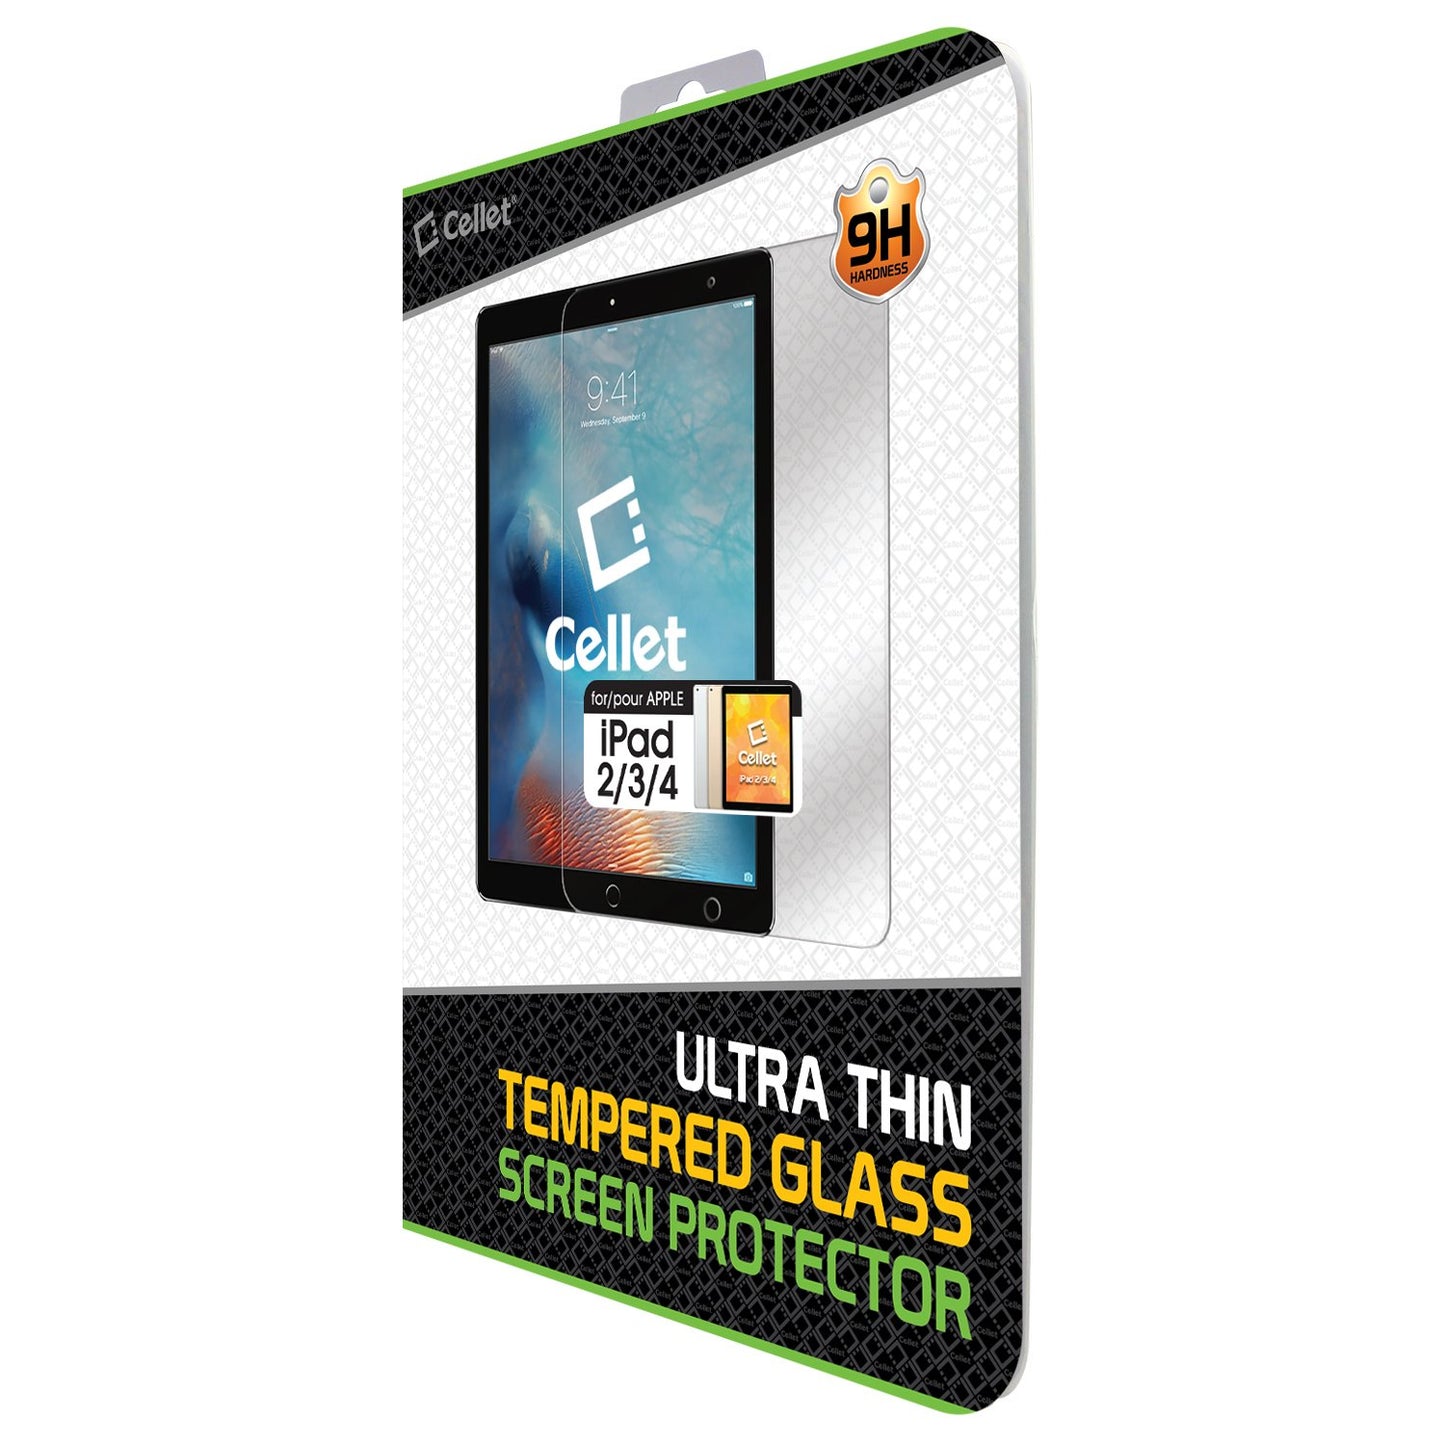 SGIPHIPAD234 - iPad Screen, iPad 2/3/4 Tempered Glass Screen Protector Premium Tempered 9H Glass Screen Protector for iPad 2/3/4